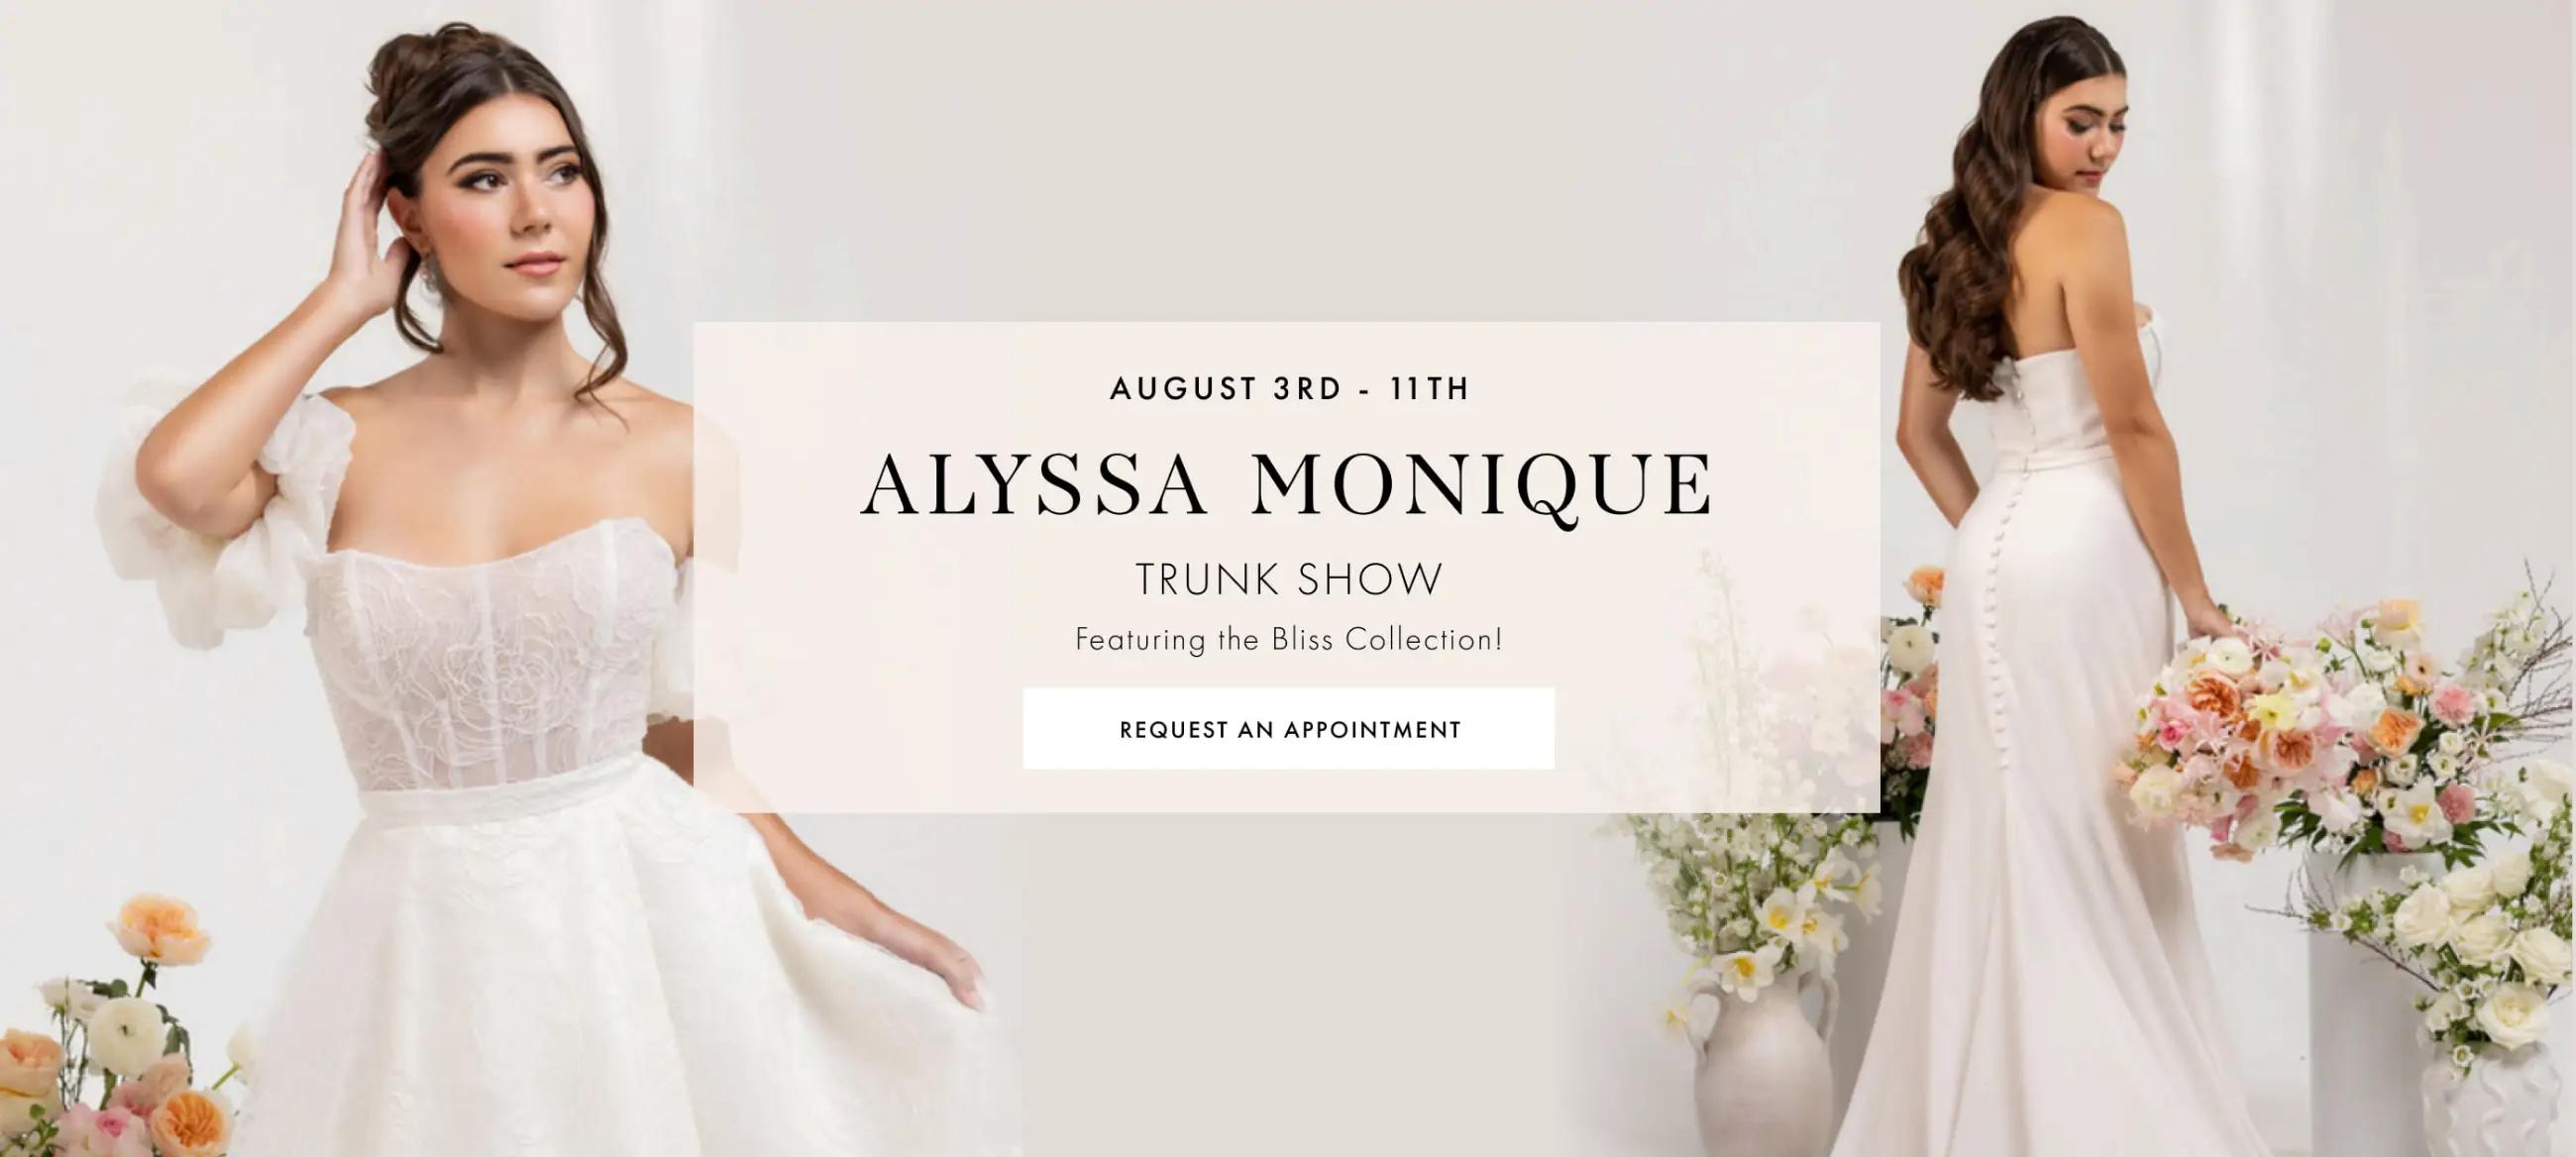 Alyssa Monique Trunk Show Banner Desktop